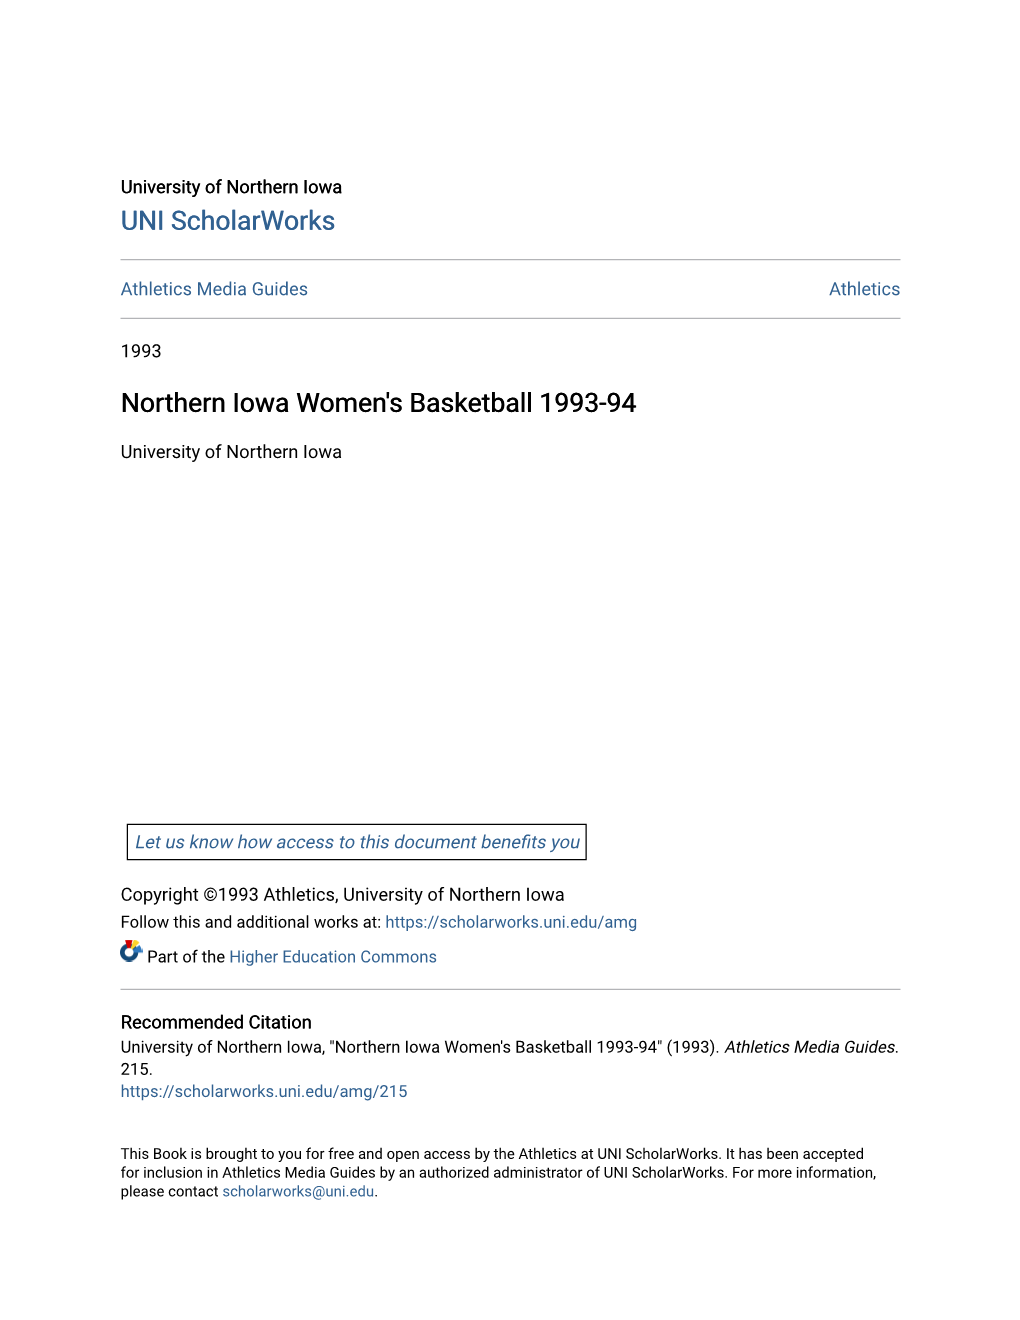 Northern Iowa Women's Basketball 1993-94